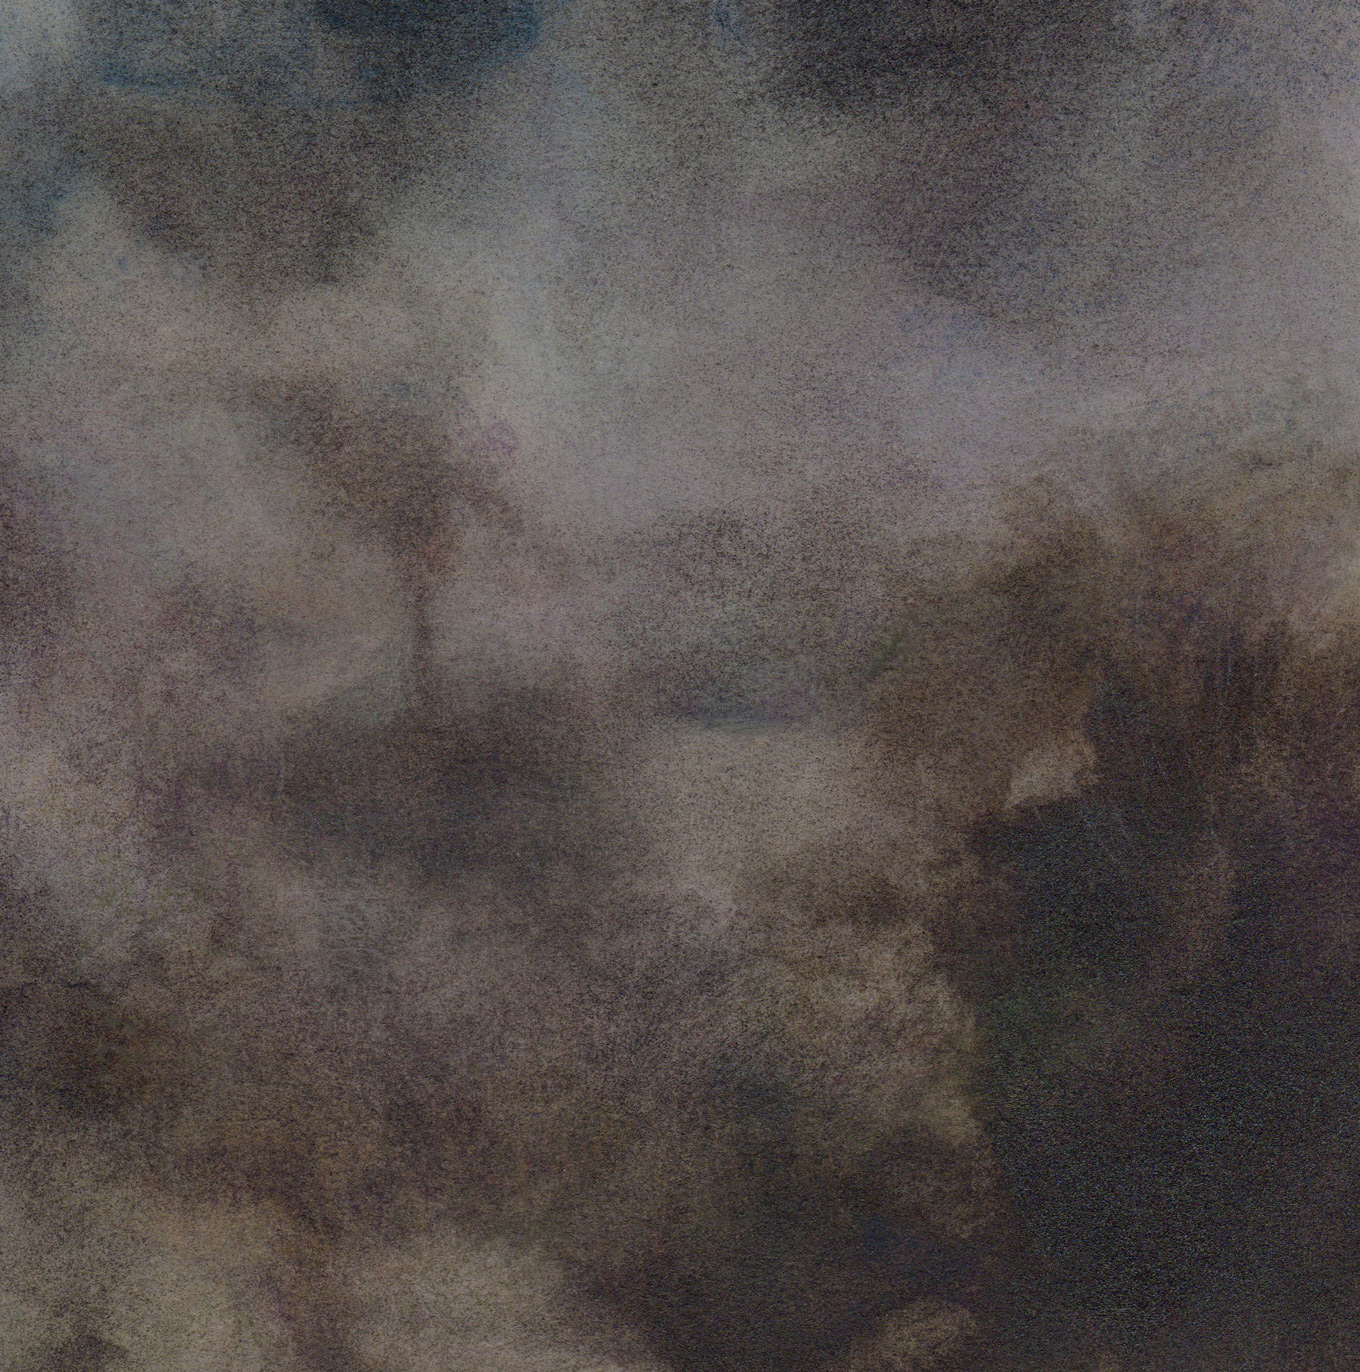 L1299 - Nicholas Herbert, British Artist, mixed media landscape painting of open counryside near Woburn, 2021